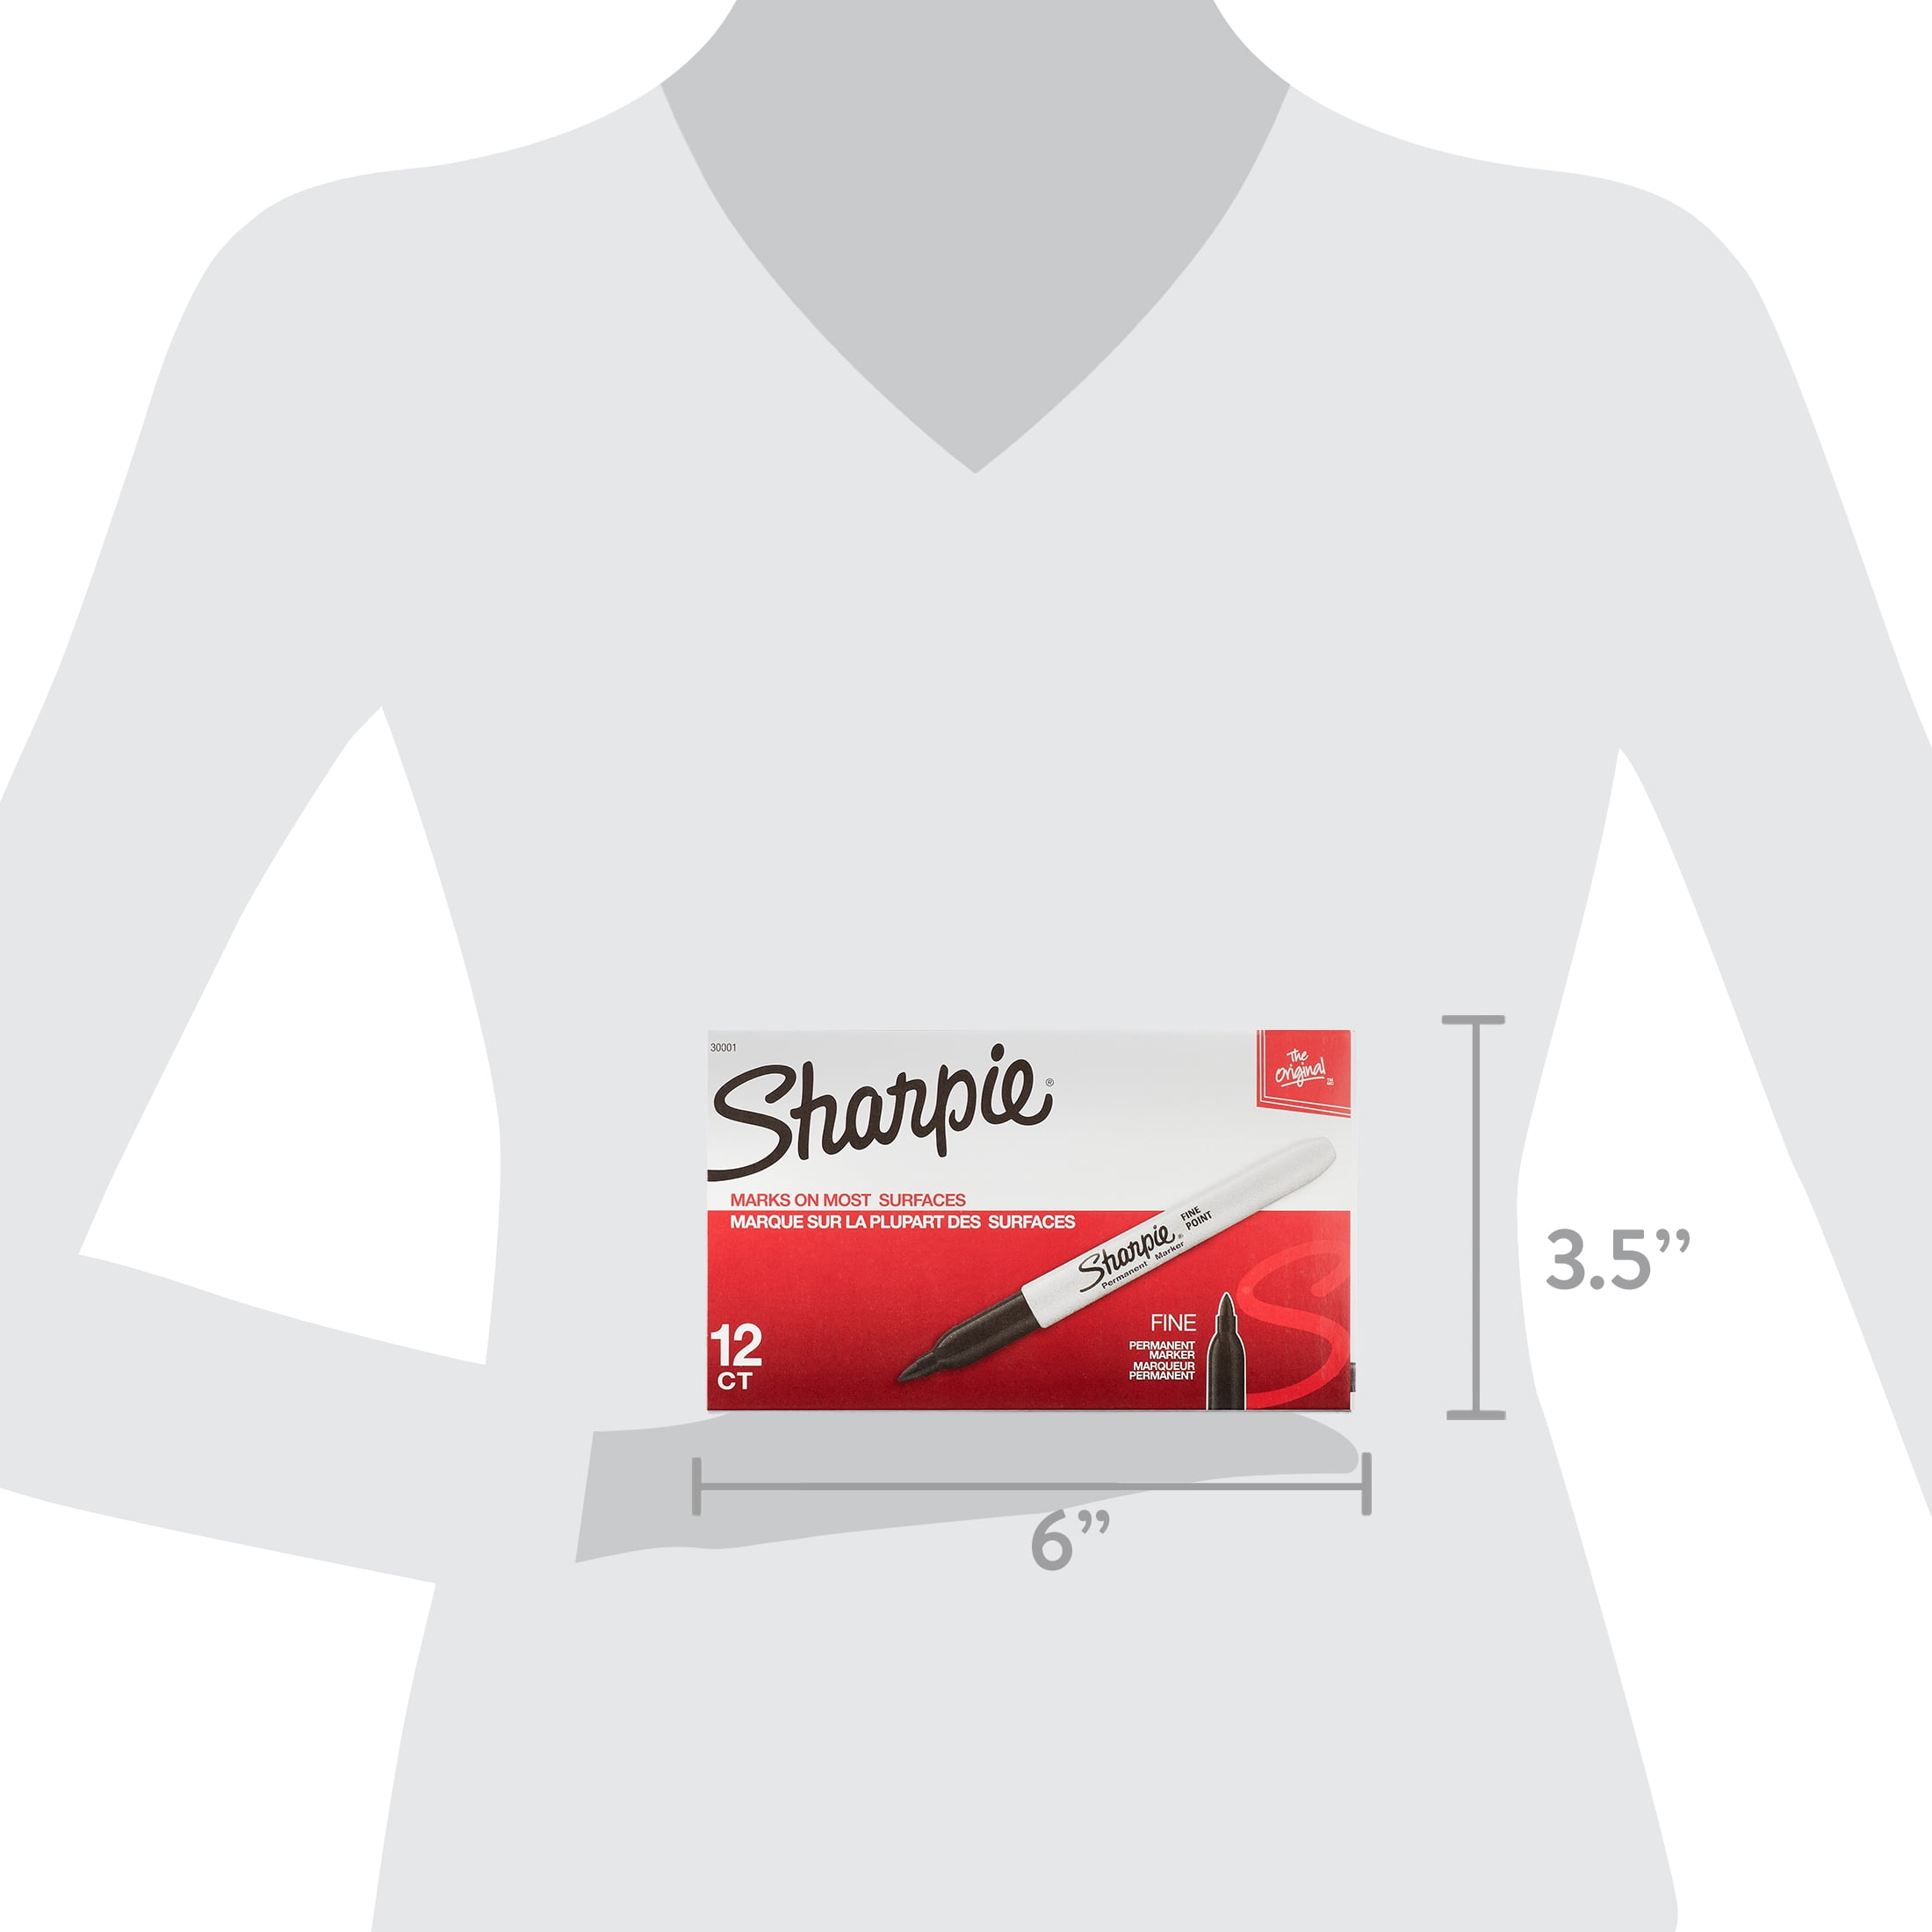 Sharpie Fine Point Permanent Marker, Black (2-Pack) 2003567 - The